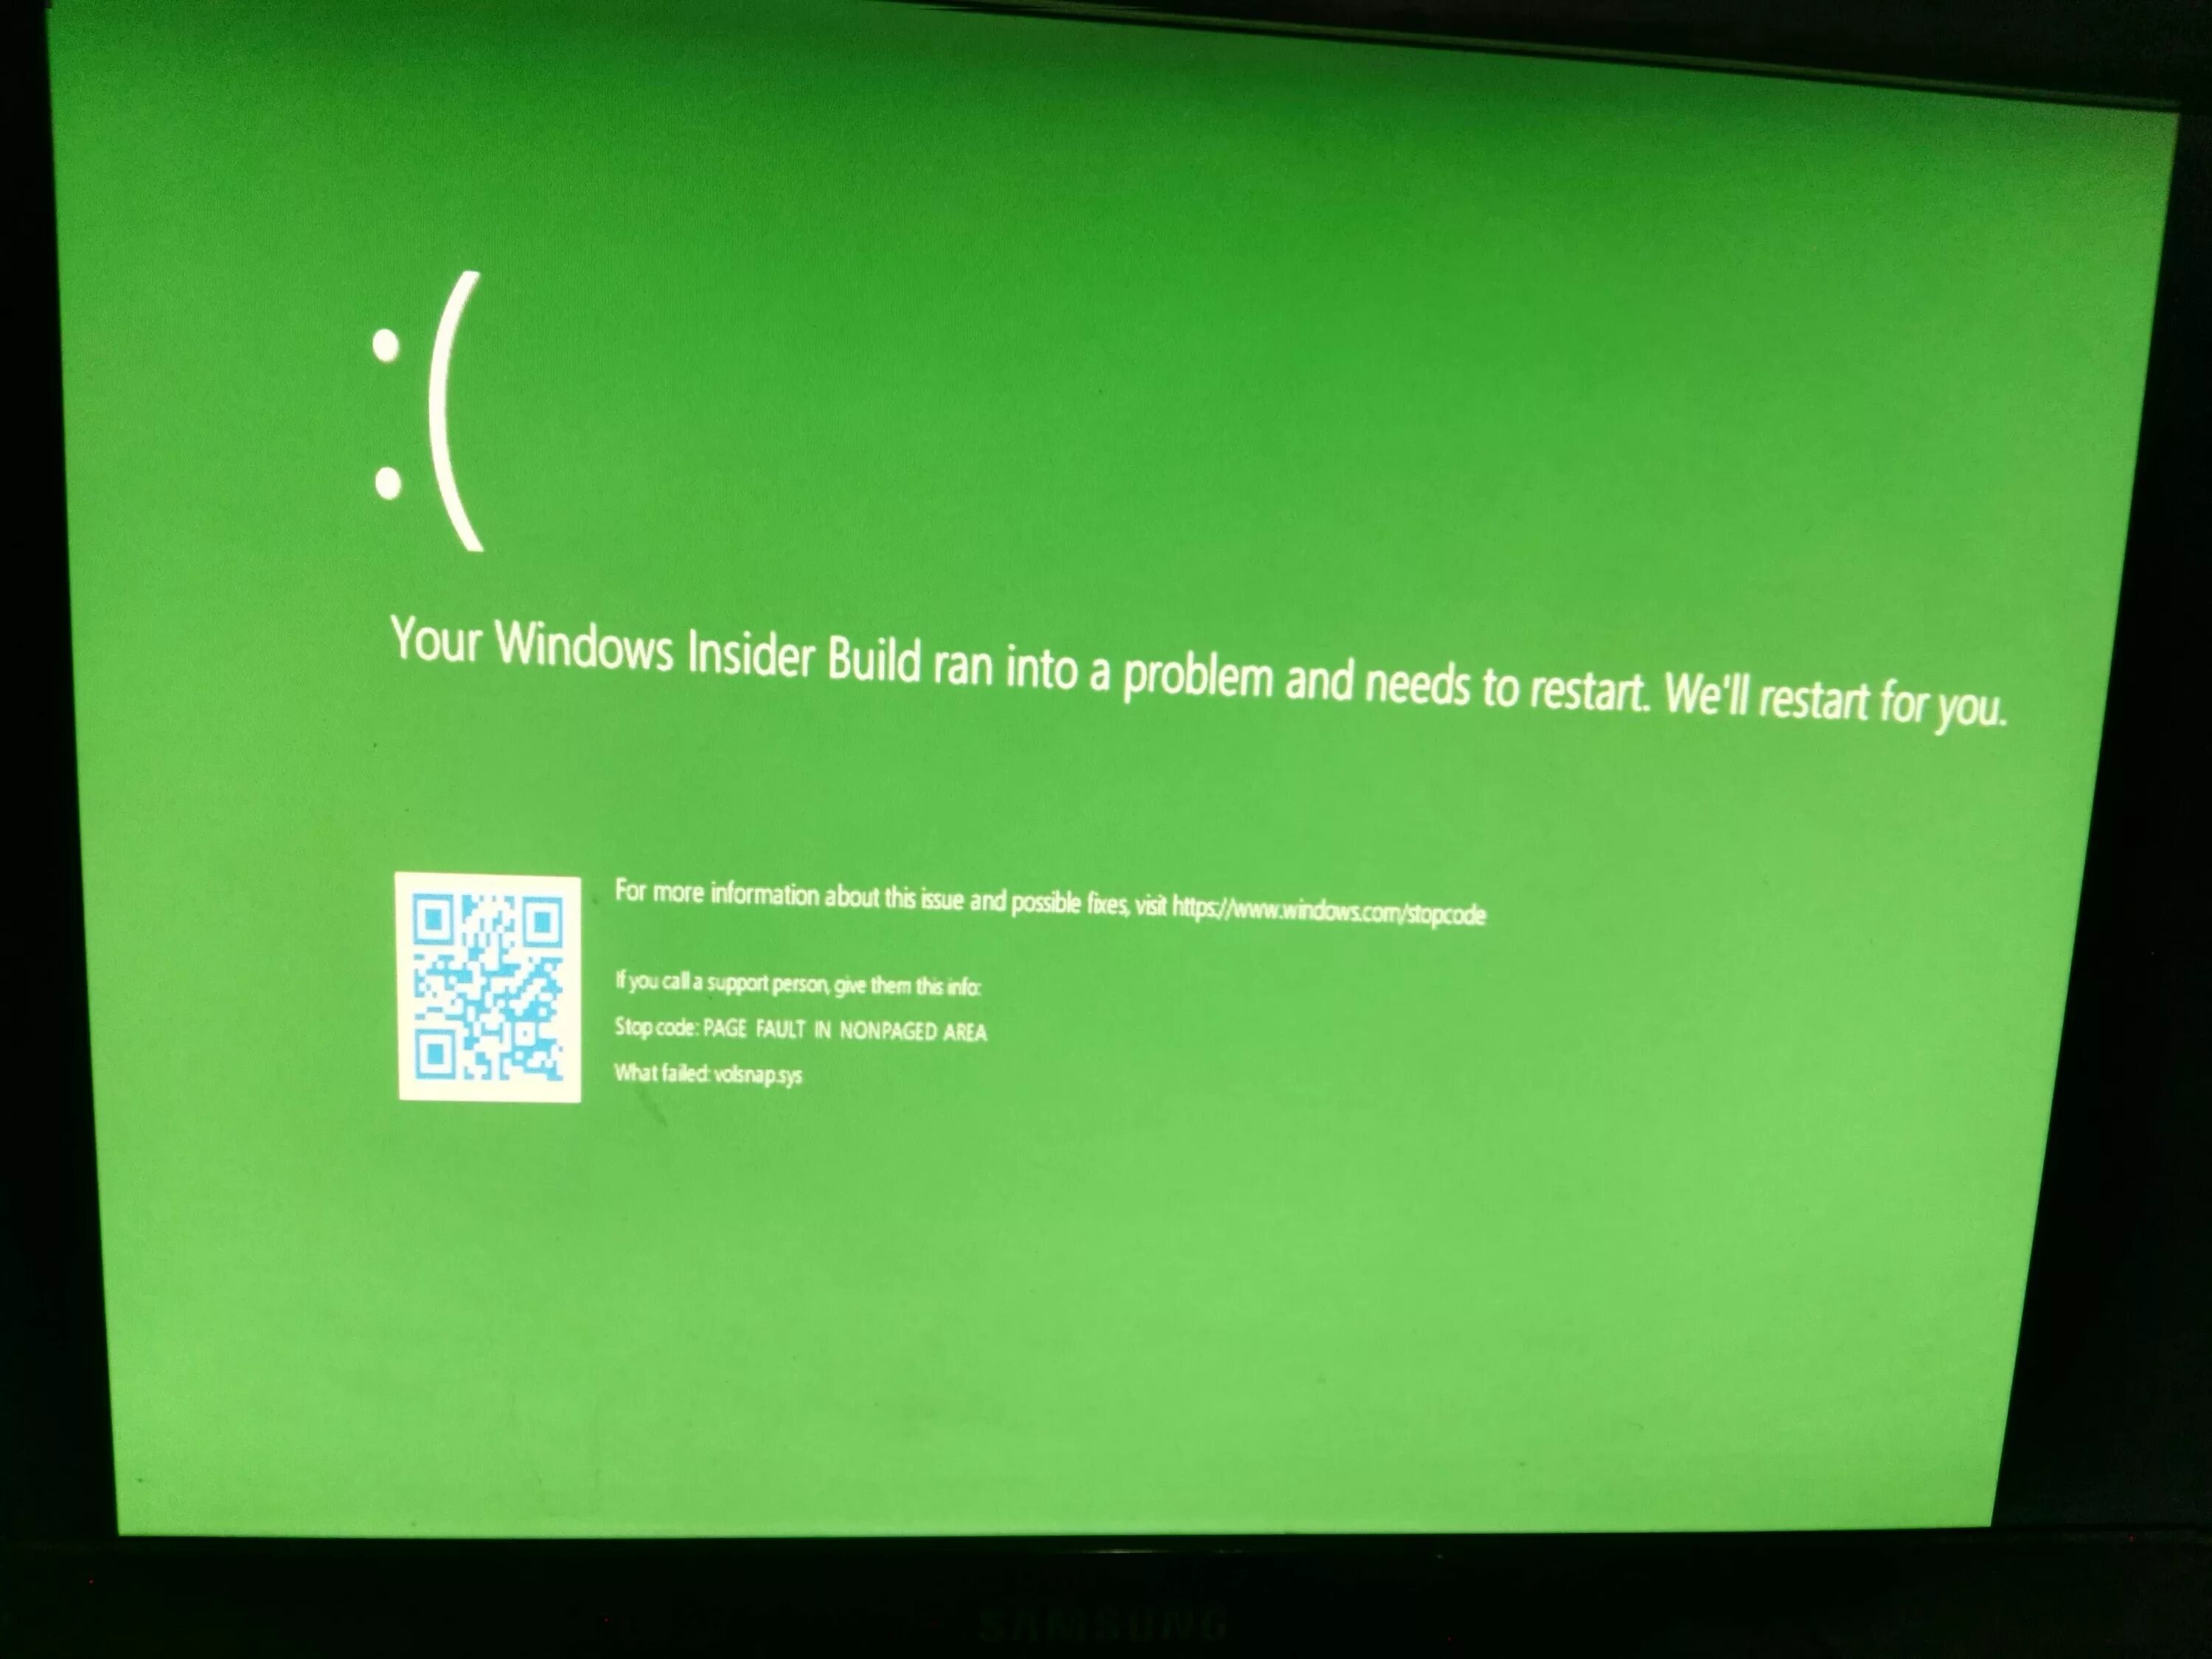 Синий экран смерти Windows. Page Fault in NONPAGED area Windows 10. Игра BSOD. Ошибка зеленый экран виндовс.